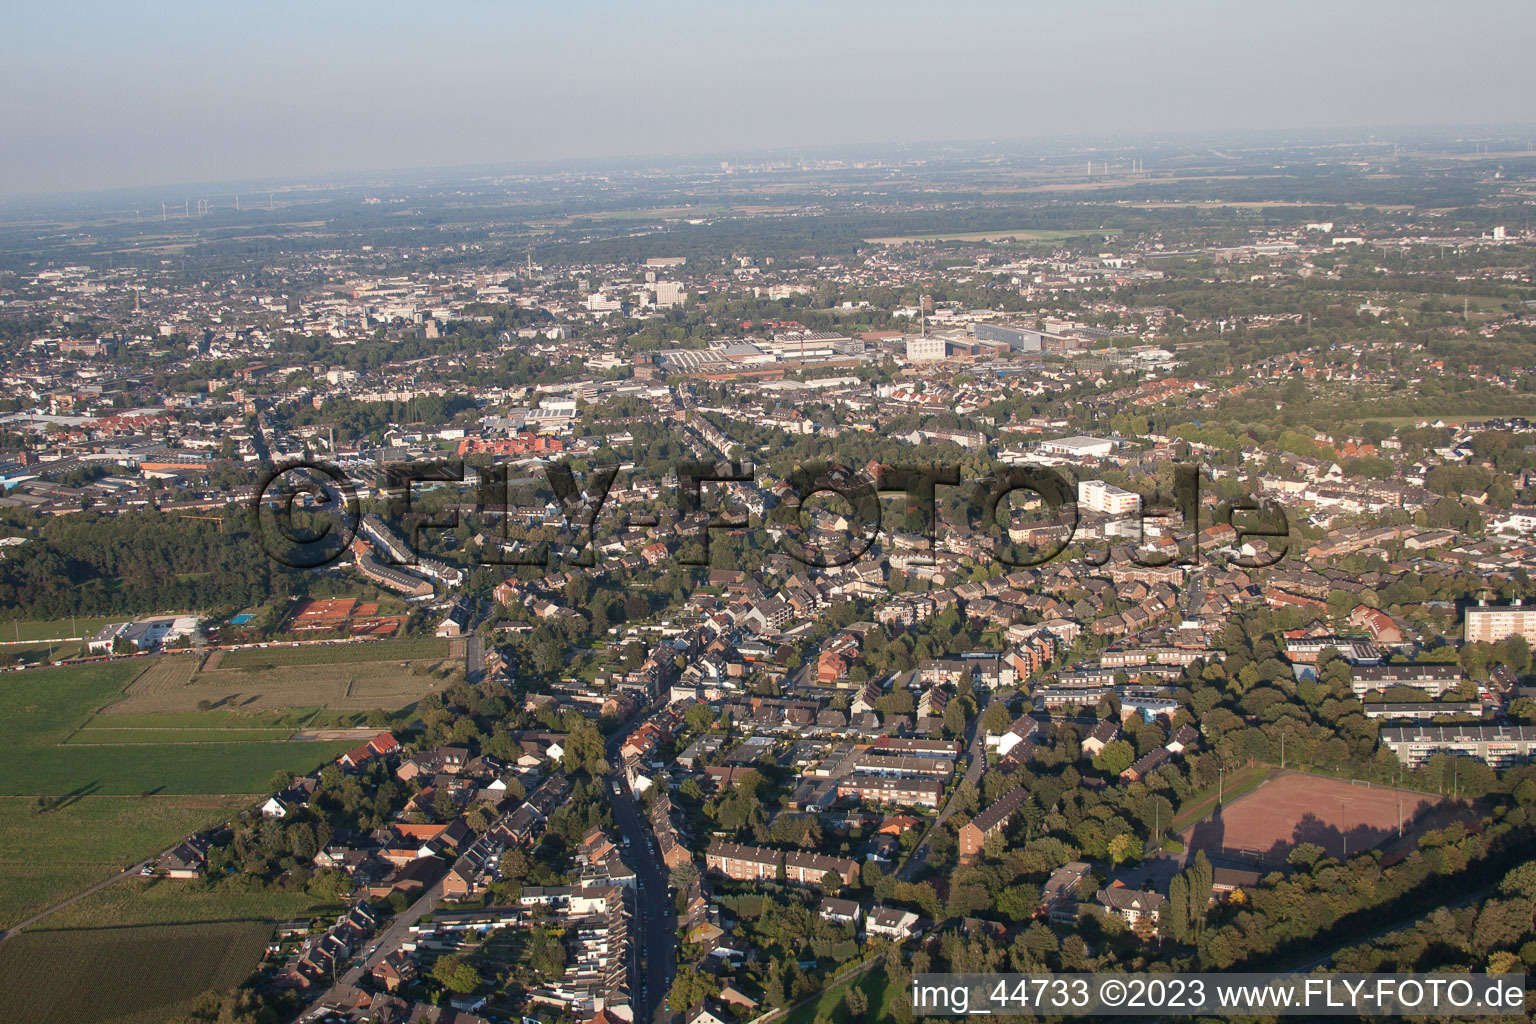 Aerial photograpy of Mönchengladbach in the state North Rhine-Westphalia, Germany